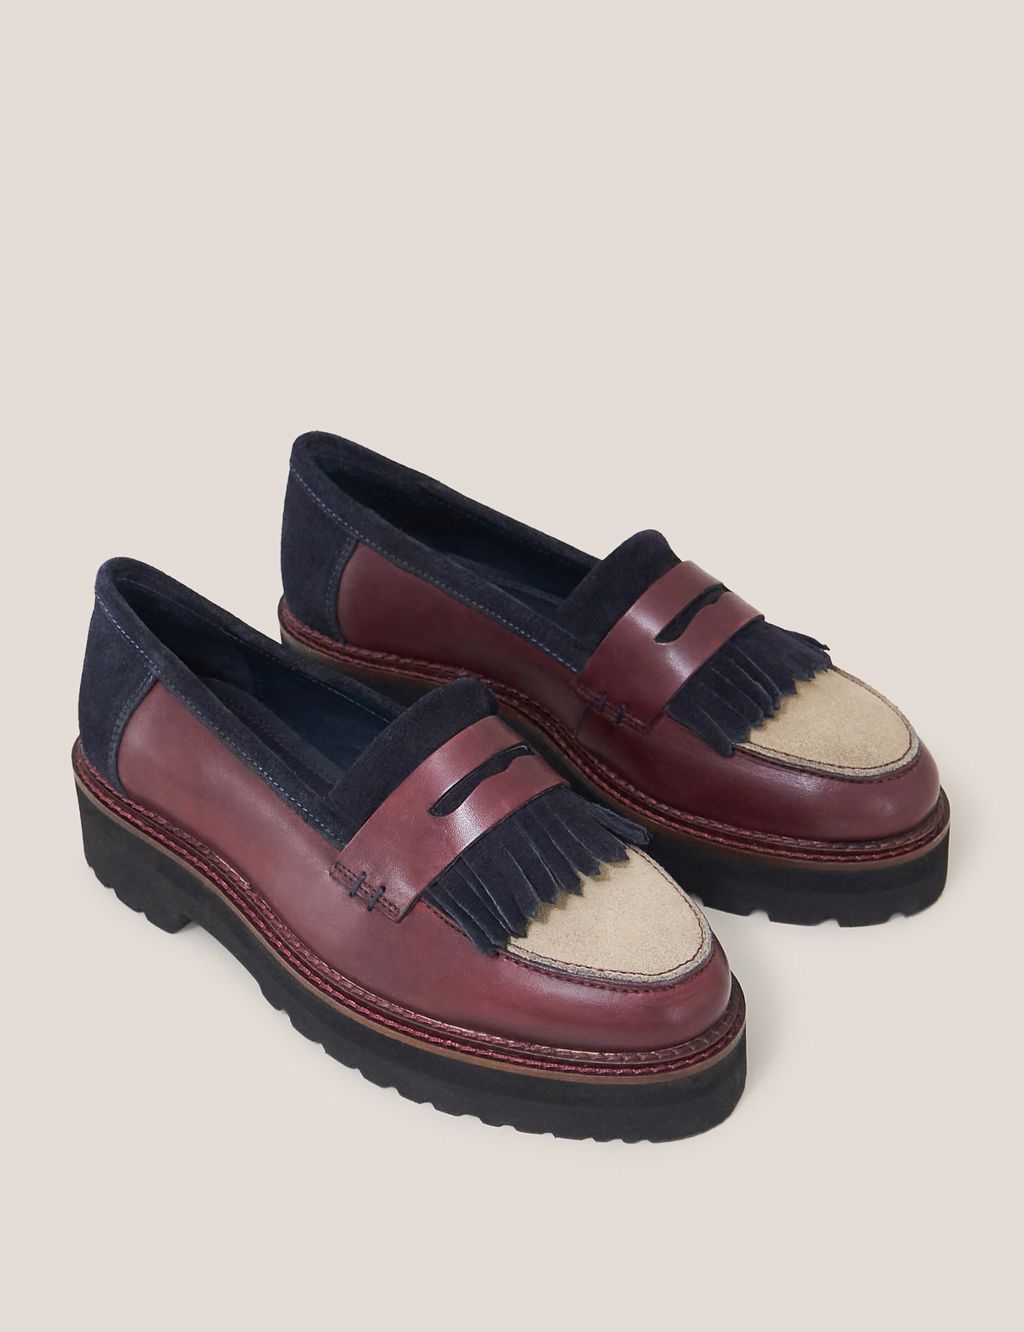 Leather Flatform Loafers image 2